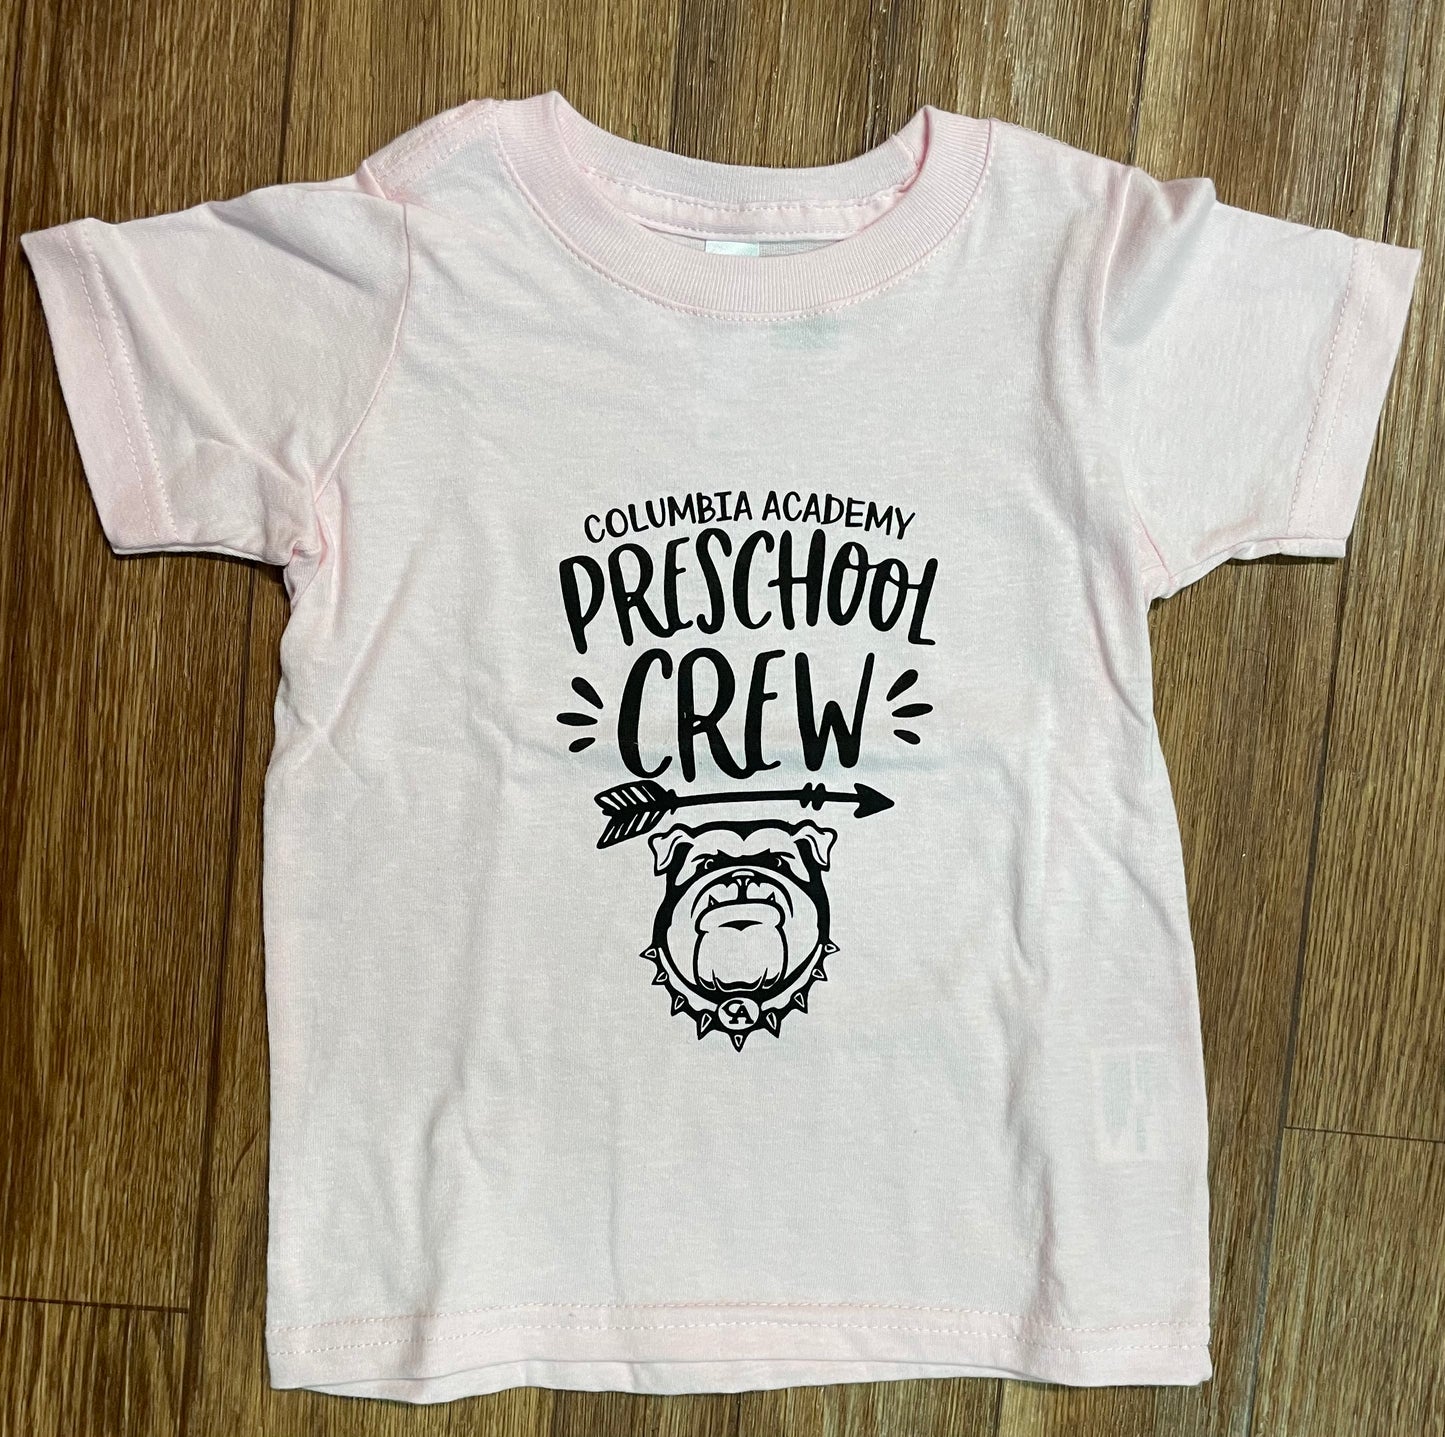 Pre-School Crew T-shirt - #1615